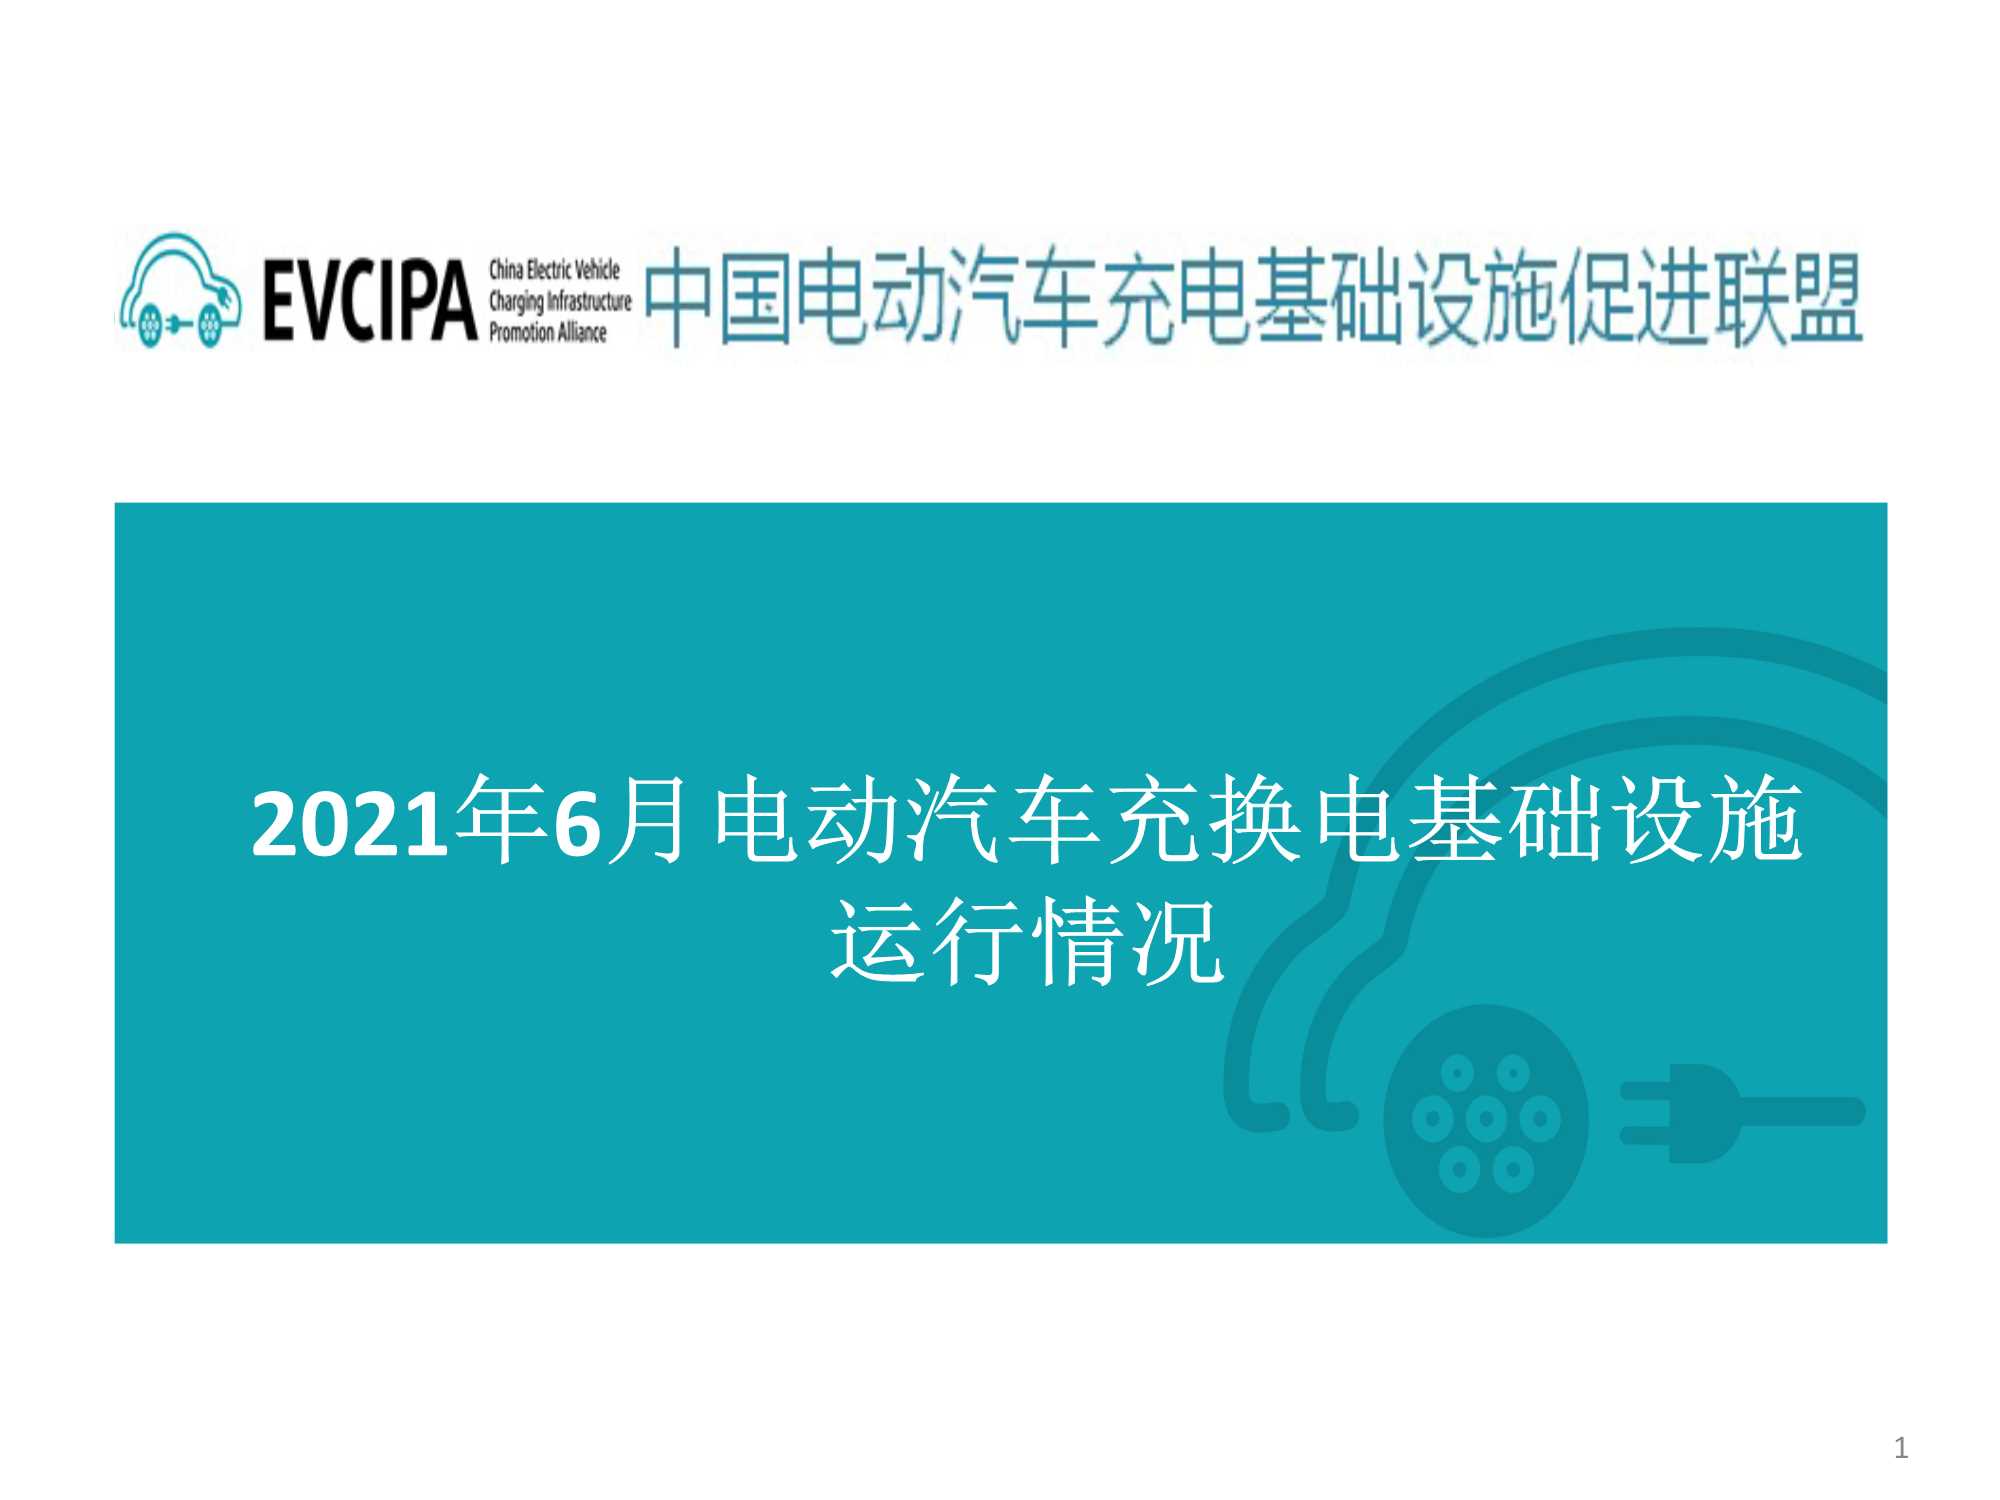 EVCIPA-2021年6月电动汽车充换电基础设施运行情况-2021.07-30页